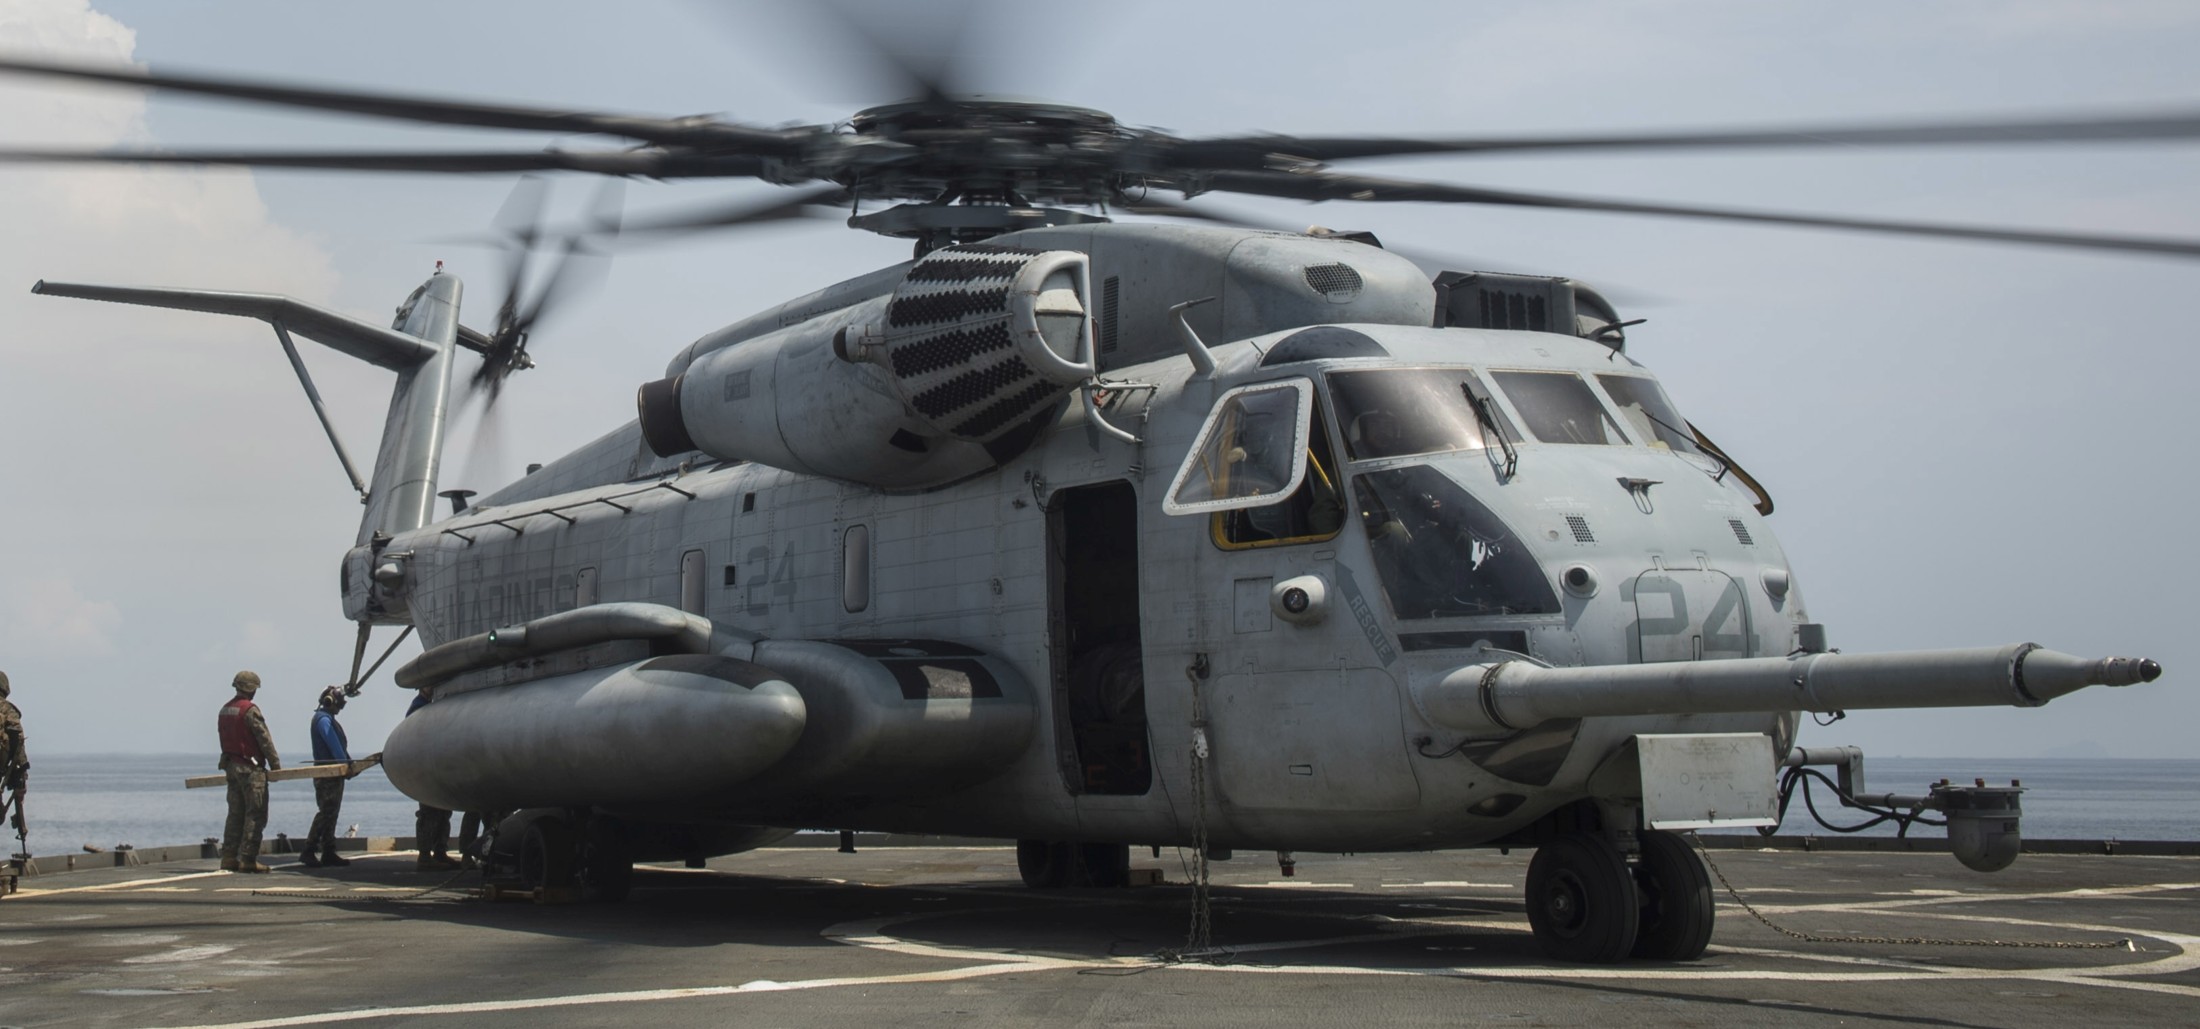 hmh-361 flying tigers marine heavy helicopter squadron usmc sikorsky ch-53e super stallion 88 uss peleliu lha-5